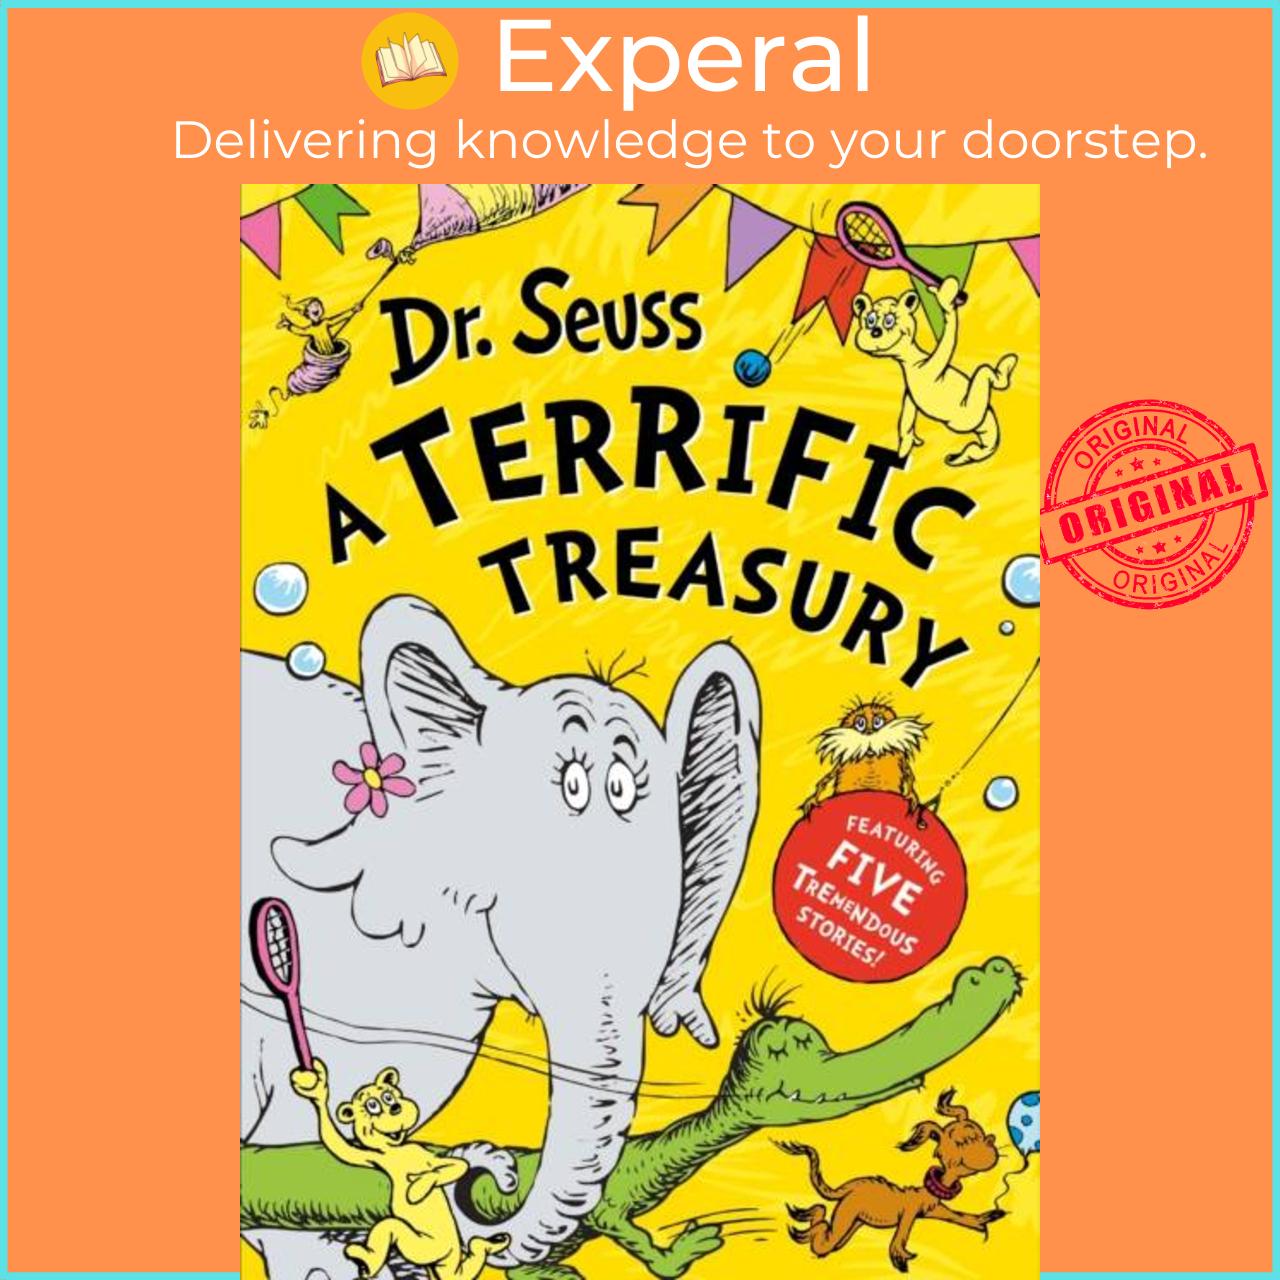 Sách - Dr. Seuss: A Terrific Treasury by Dr. Seuss (UK edition, hardcover)